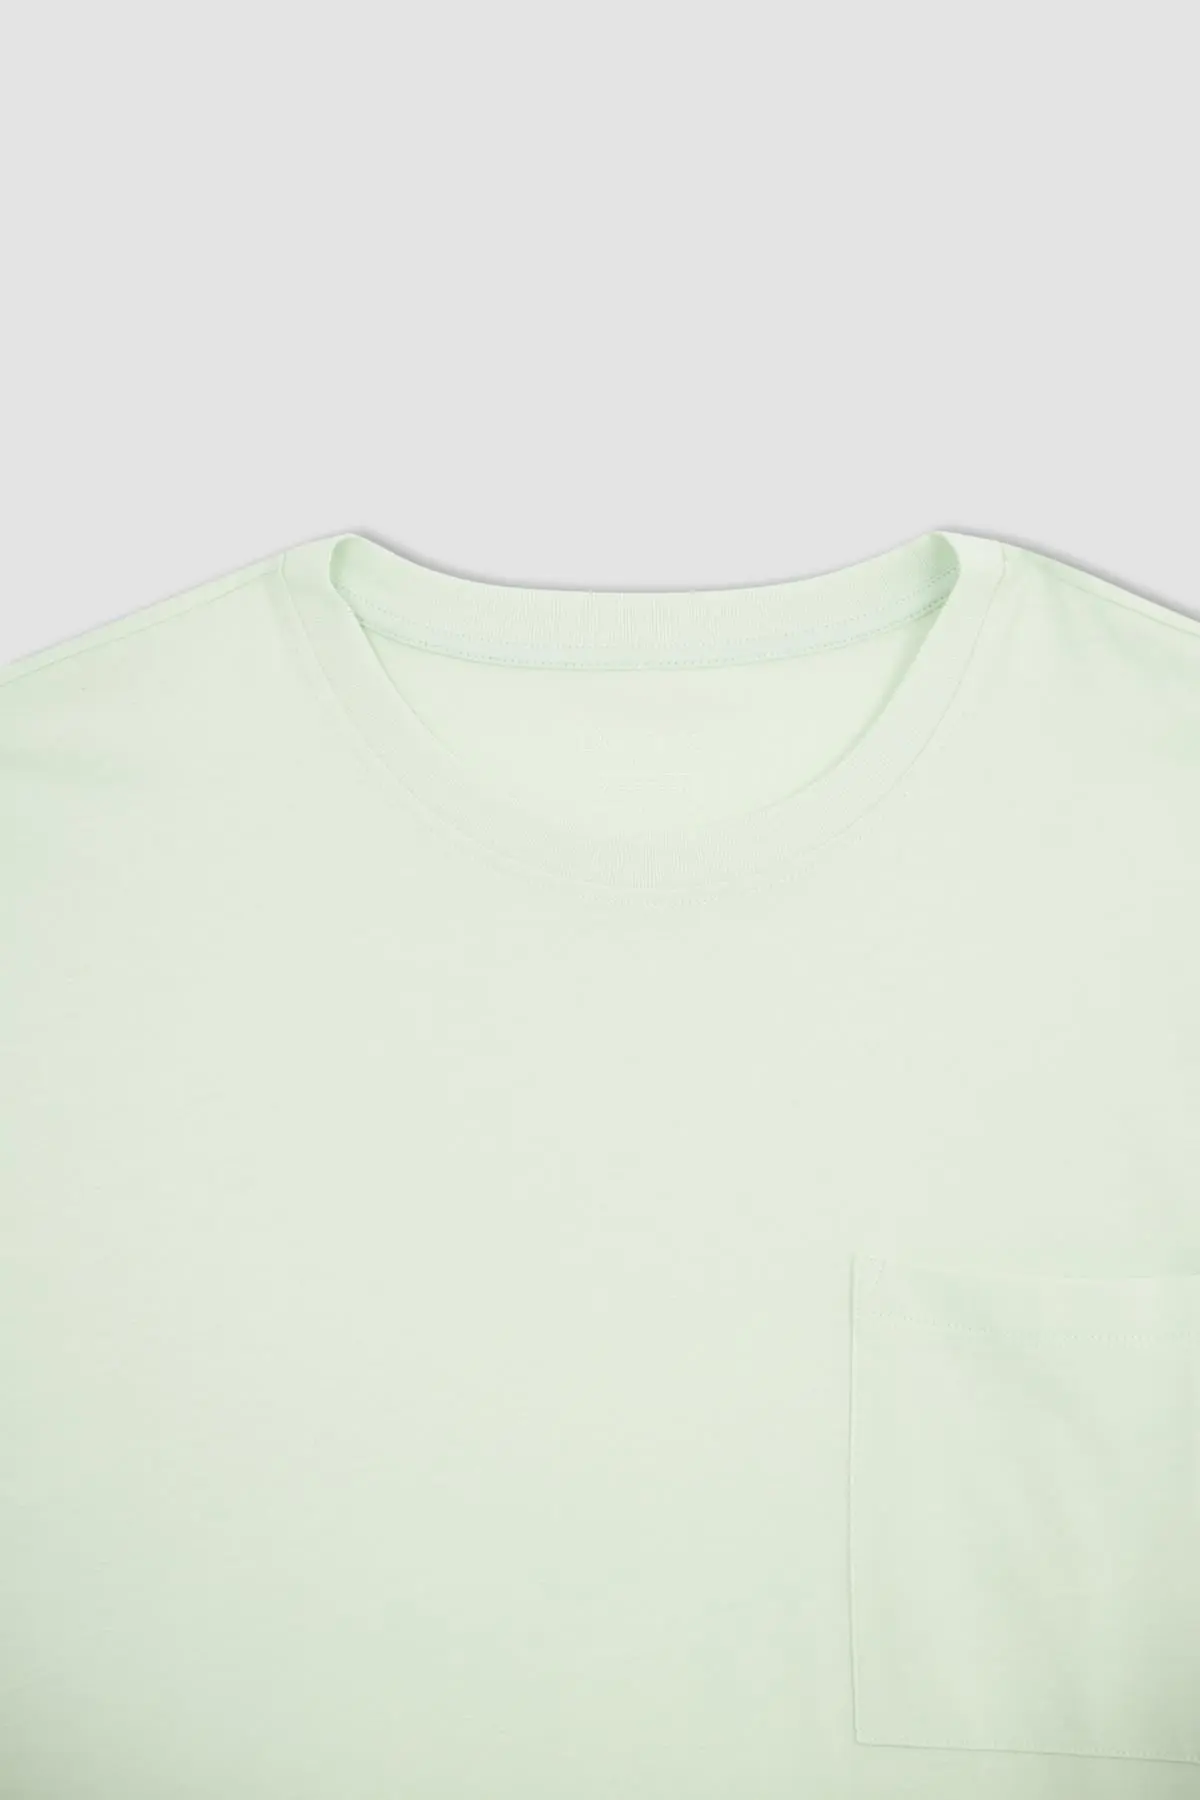 تیشرت اور سایز تک جیب مردانه سبز روشن برند Defacto 